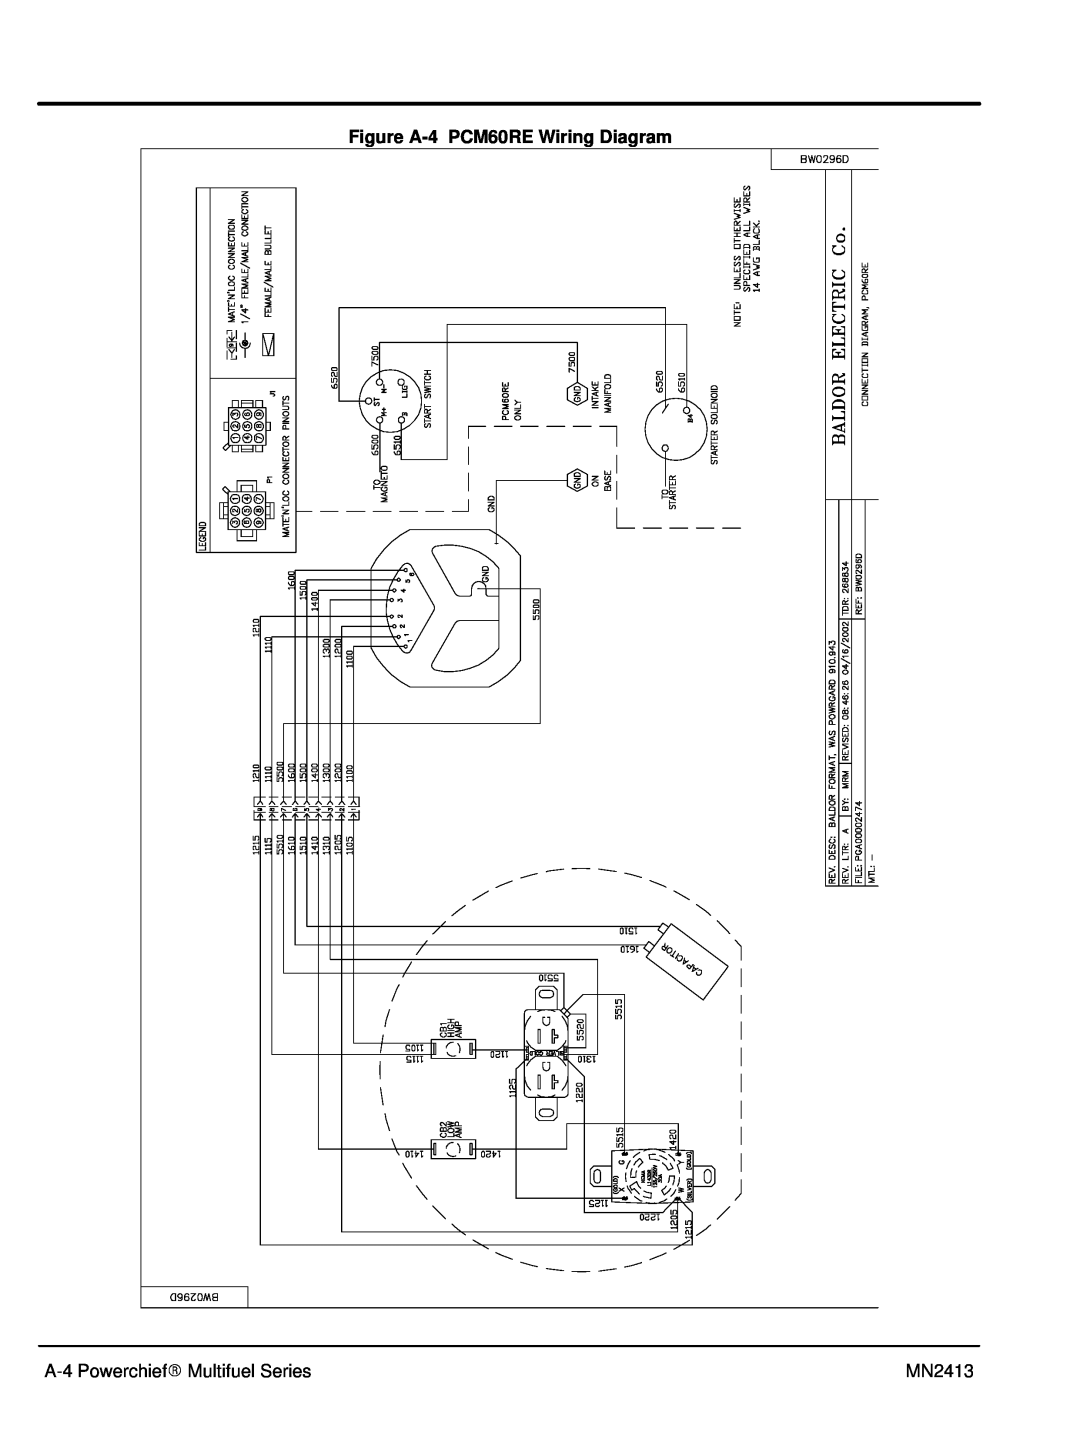 Baldor Series PC Mutlifuel manual Figure A-4 PCM60RE Wiring Diagram, A-4 PowerchiefR Multifuel Series, MN2413 